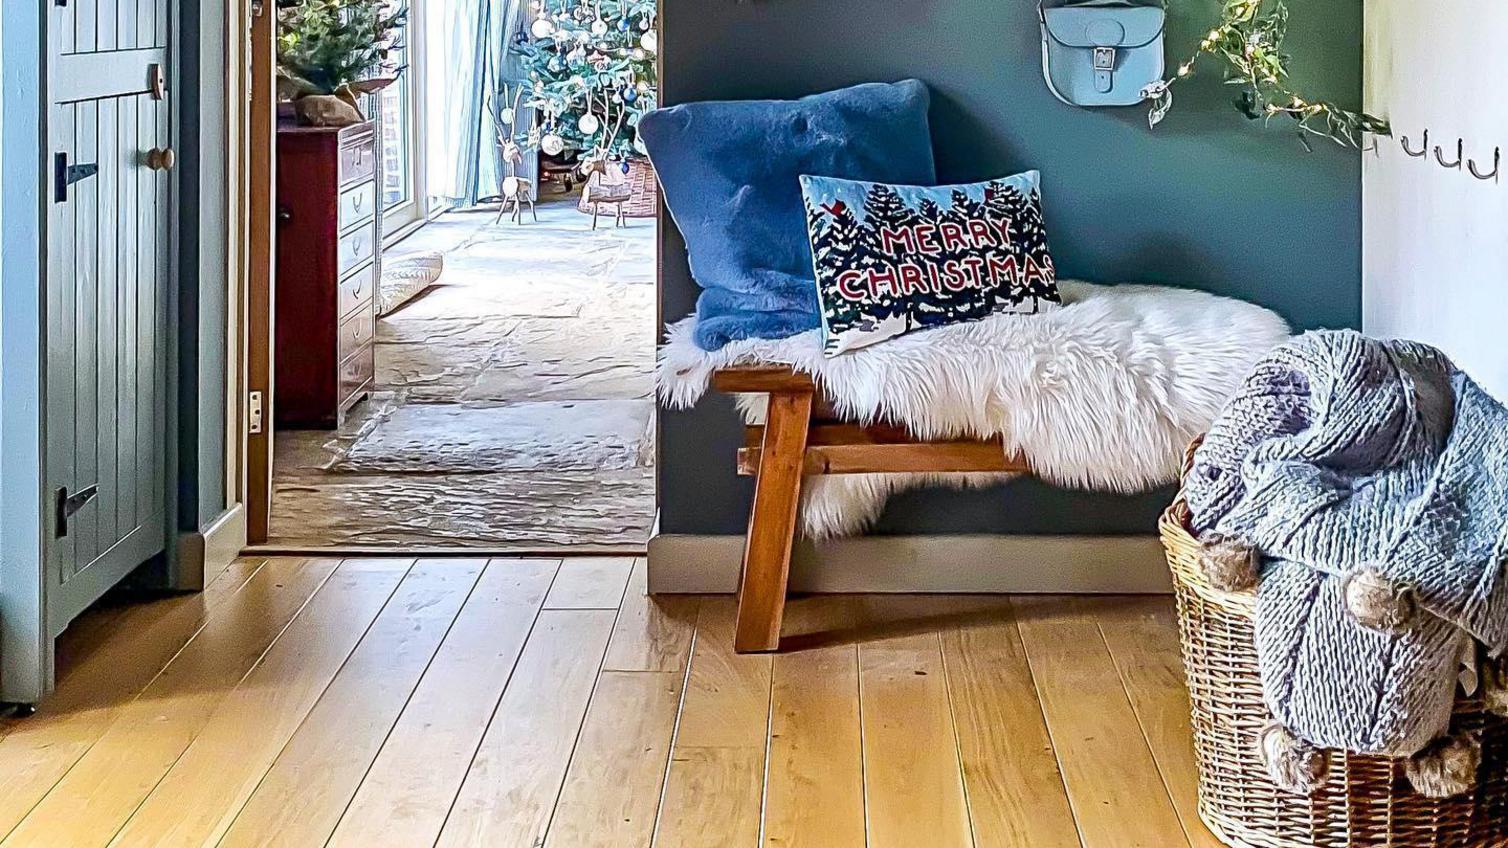 Traditional living room idea using an oak door. Contains oak beams, oak floors, black coat hooks, and a green feature wall.